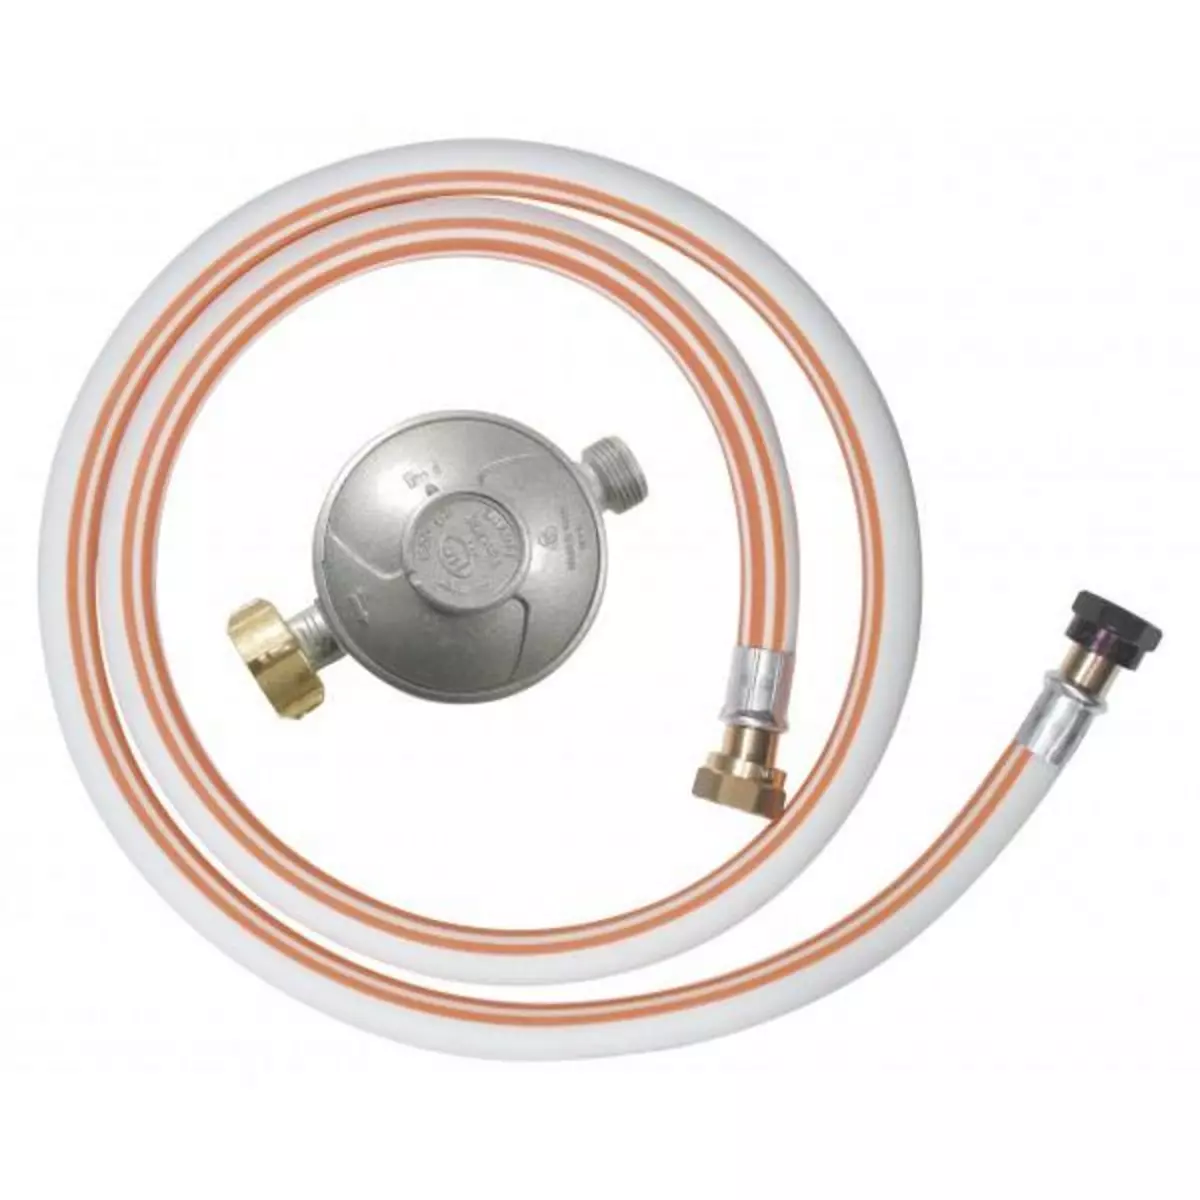 Ribitech Kit tuyau flexible butane avec 1 détendeur, 1 tétine et 1 tuyau flexible 1m50 - dg170tv810/b